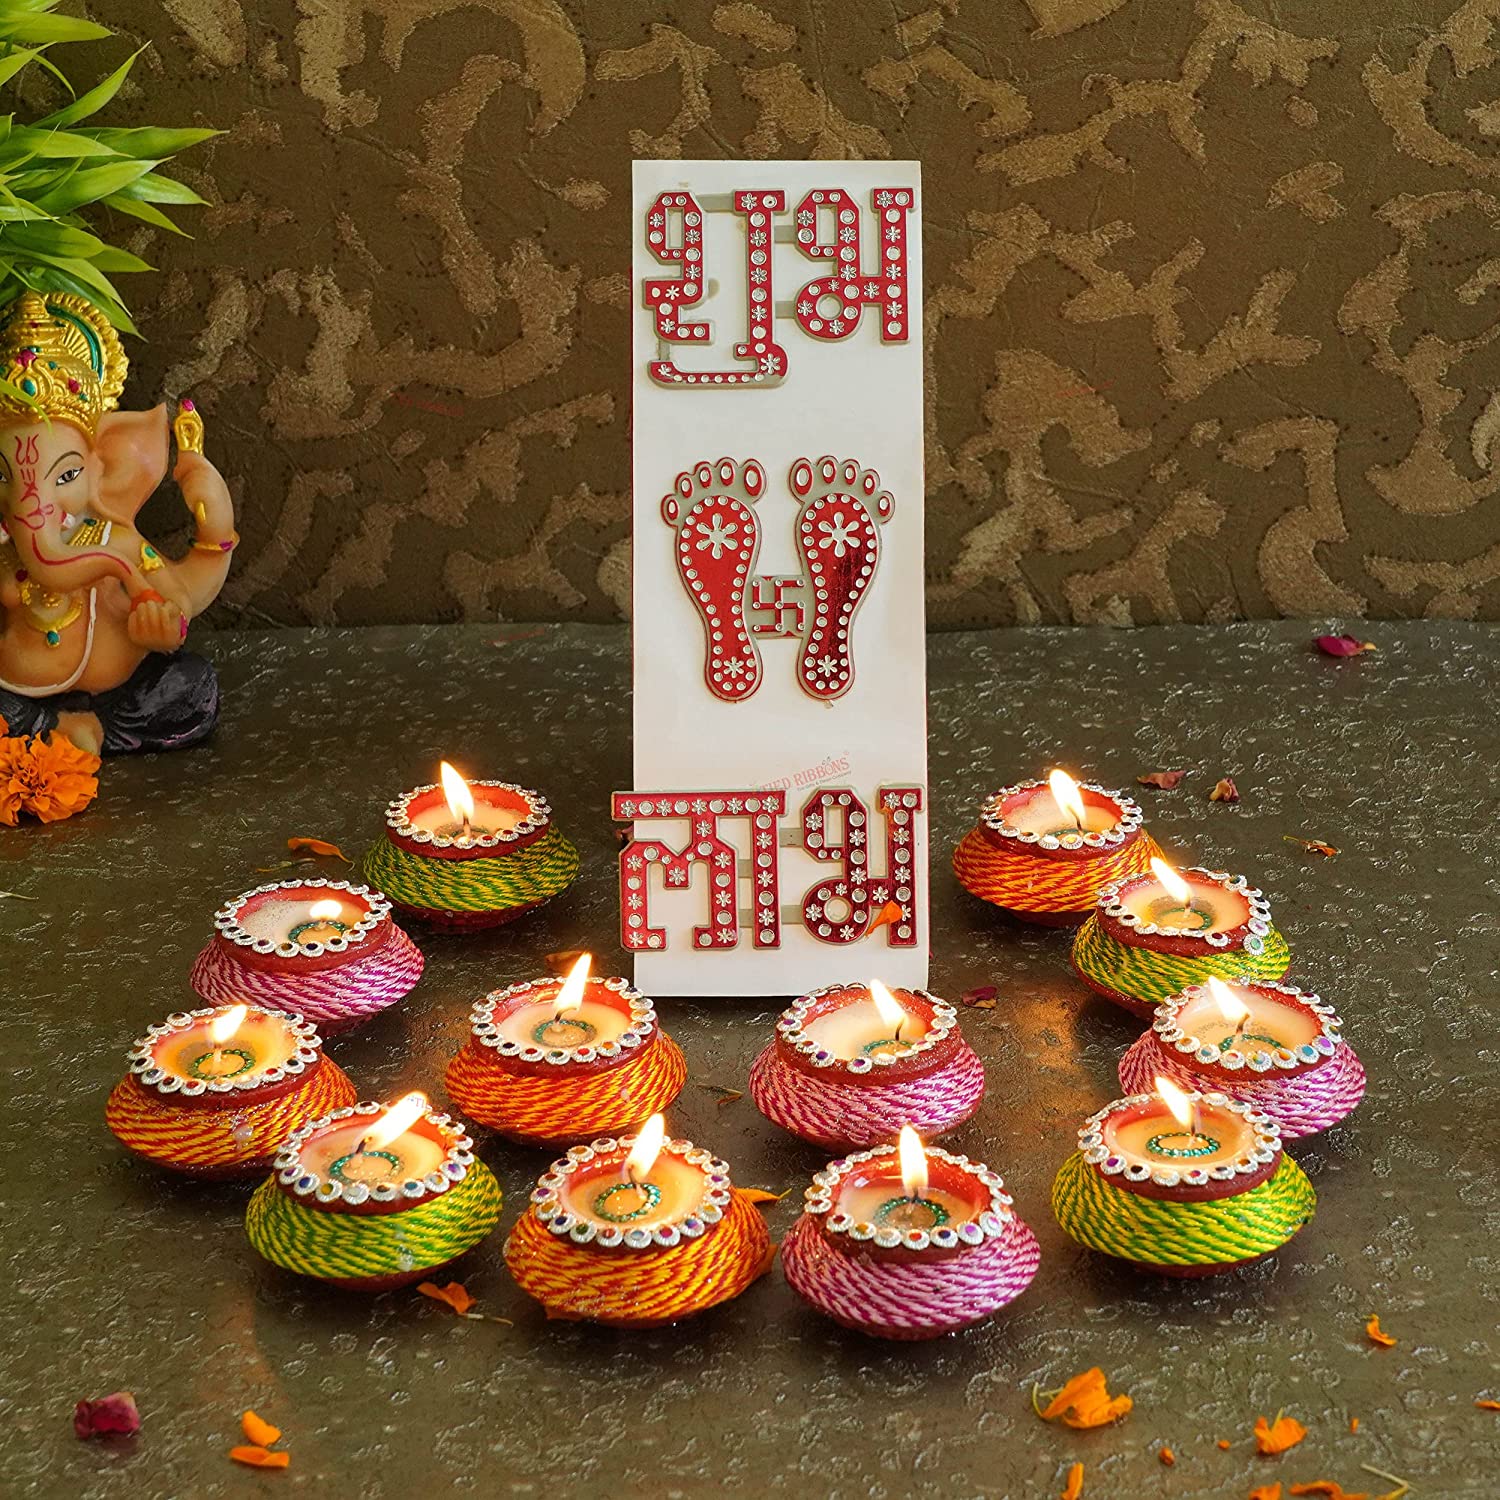 Set of 12 Wax Clay Matki Diya with Shubh Labh Sticker and Charan Paduka Stickers Combo Pack for Diwali 